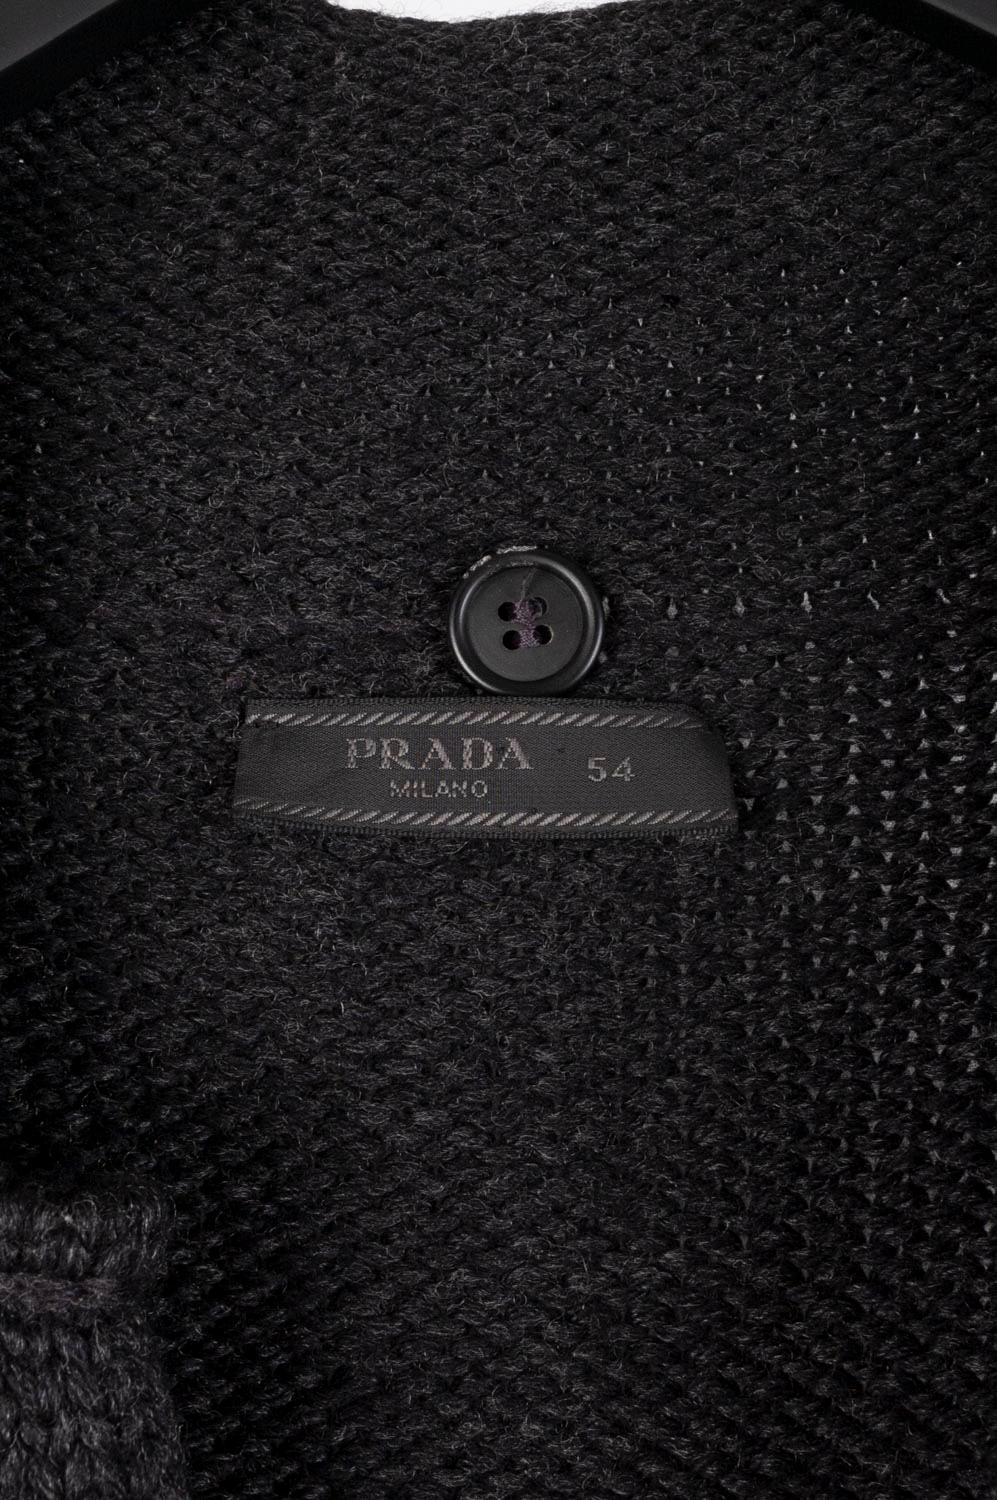 Prada Heavy Cardigan Men Sweater Size 54 (Large) S513 For Sale 2